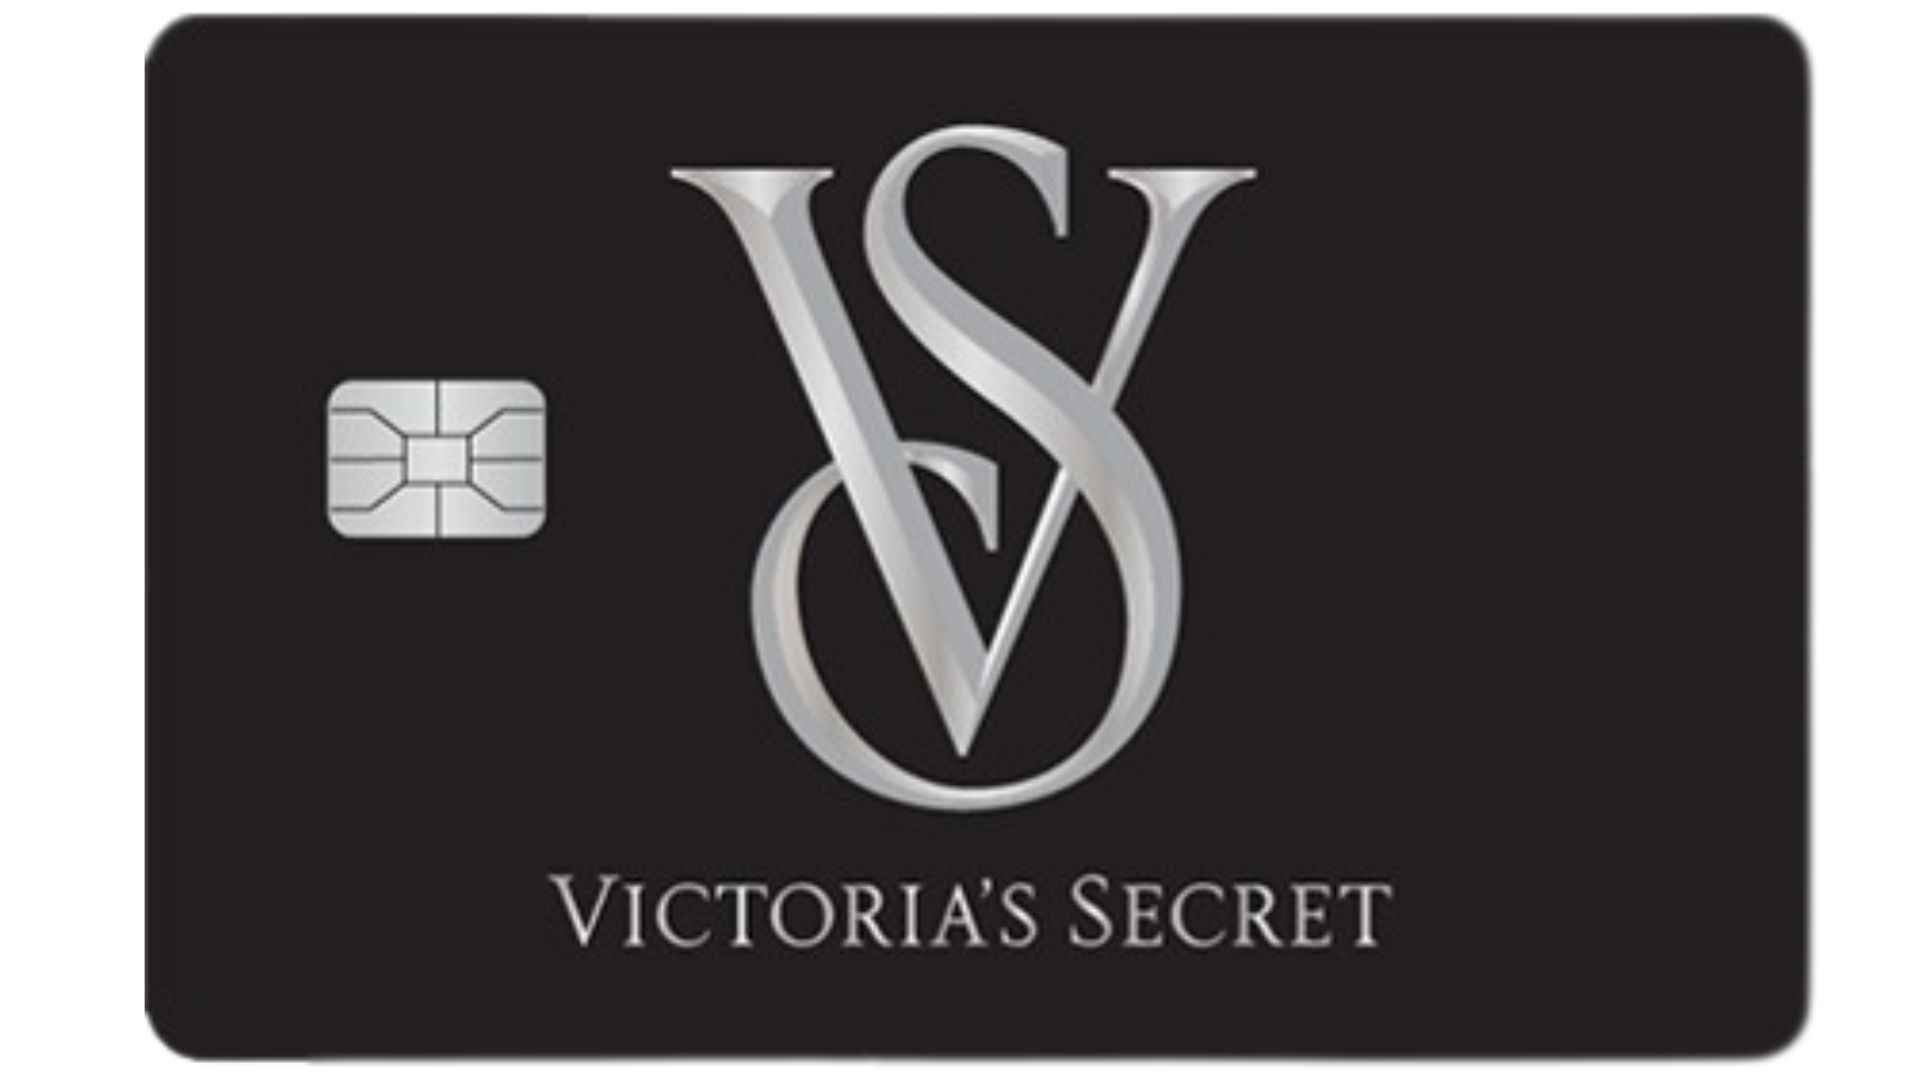 The Victoria's Secret Credit Card Benefits